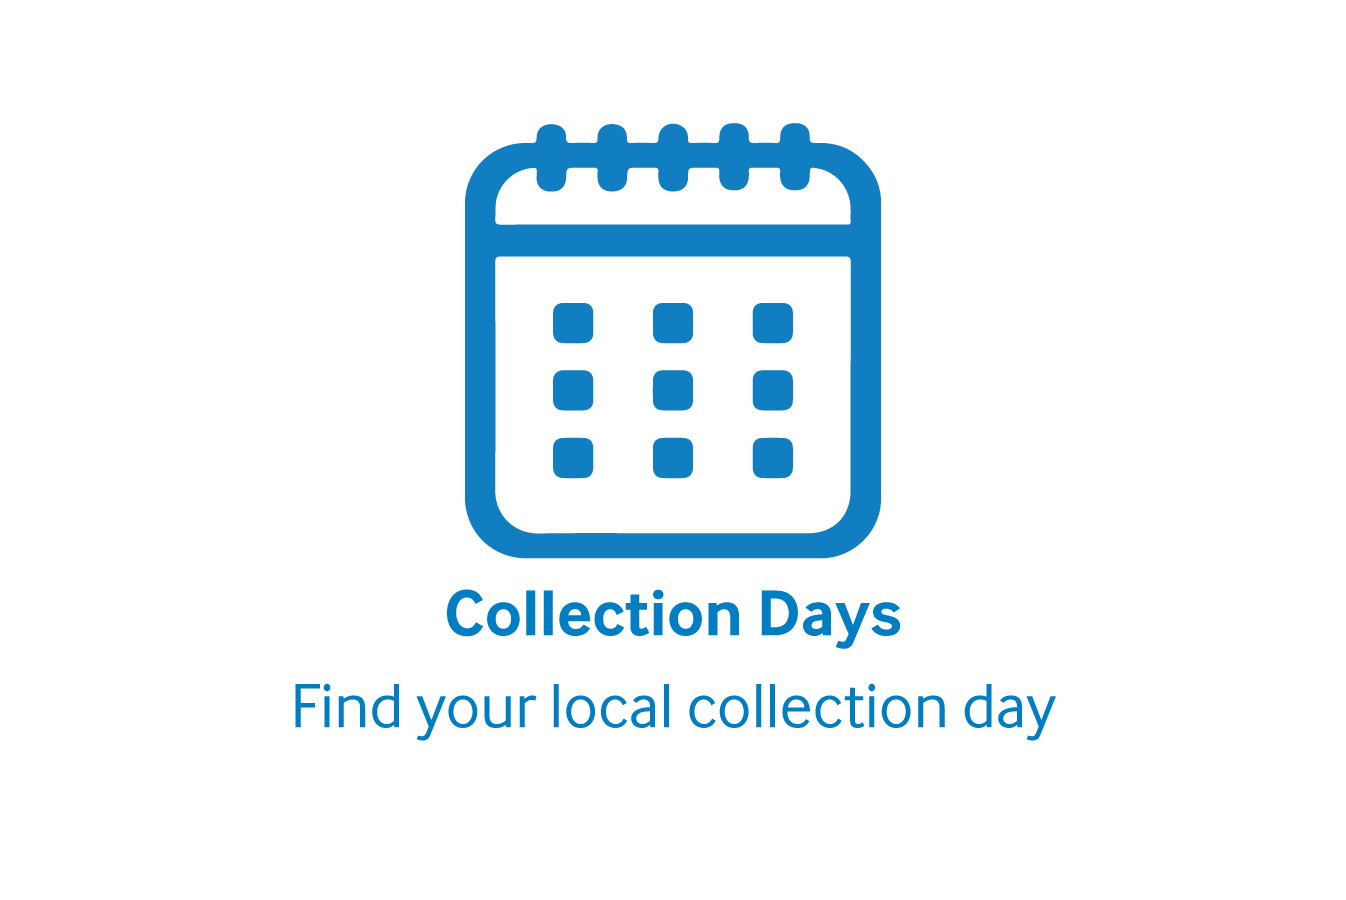 Collection Days v2